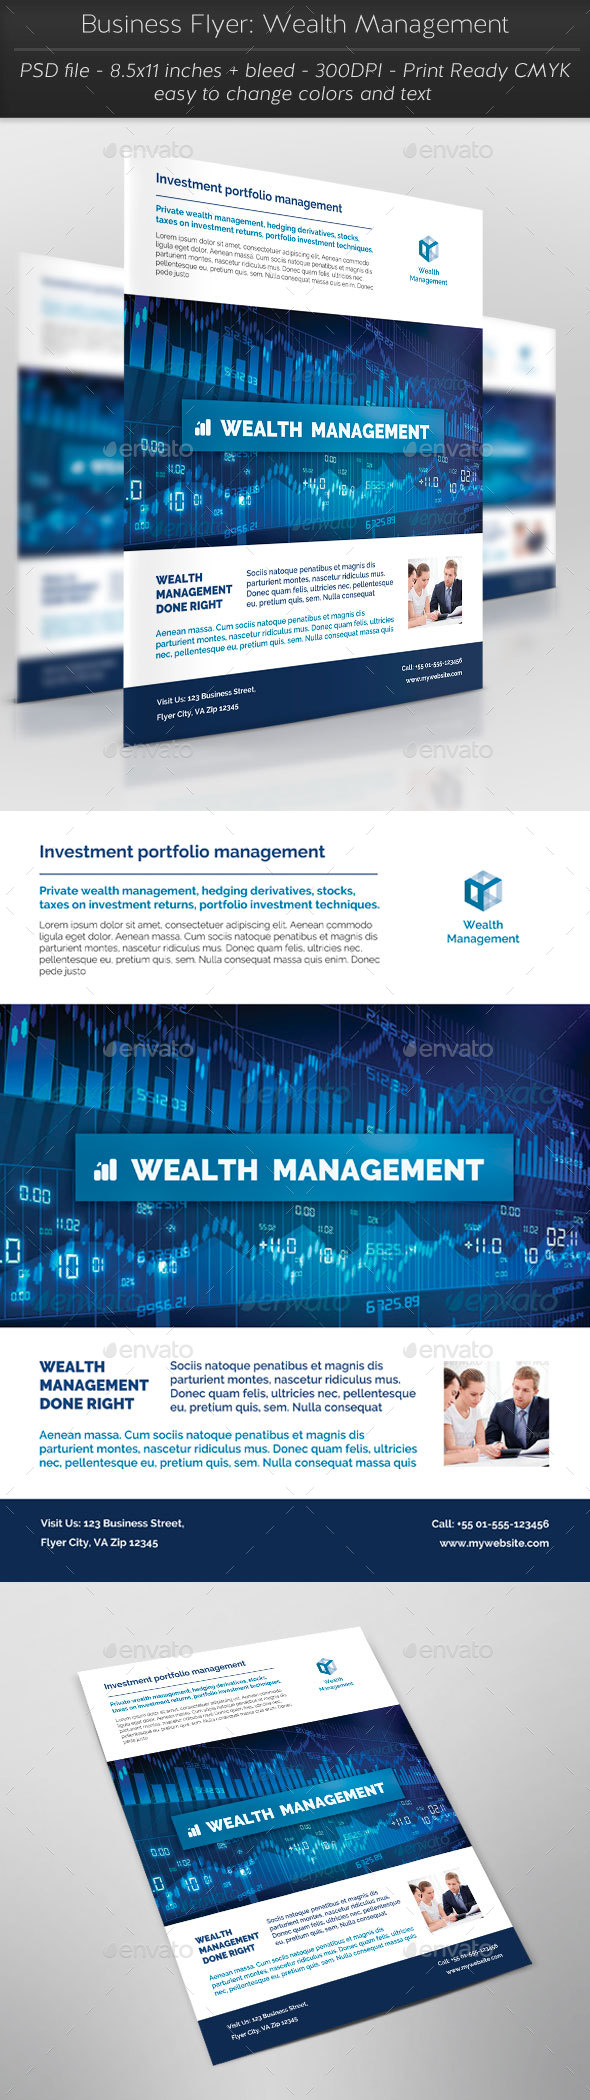 Business Flyer: Wealth Management